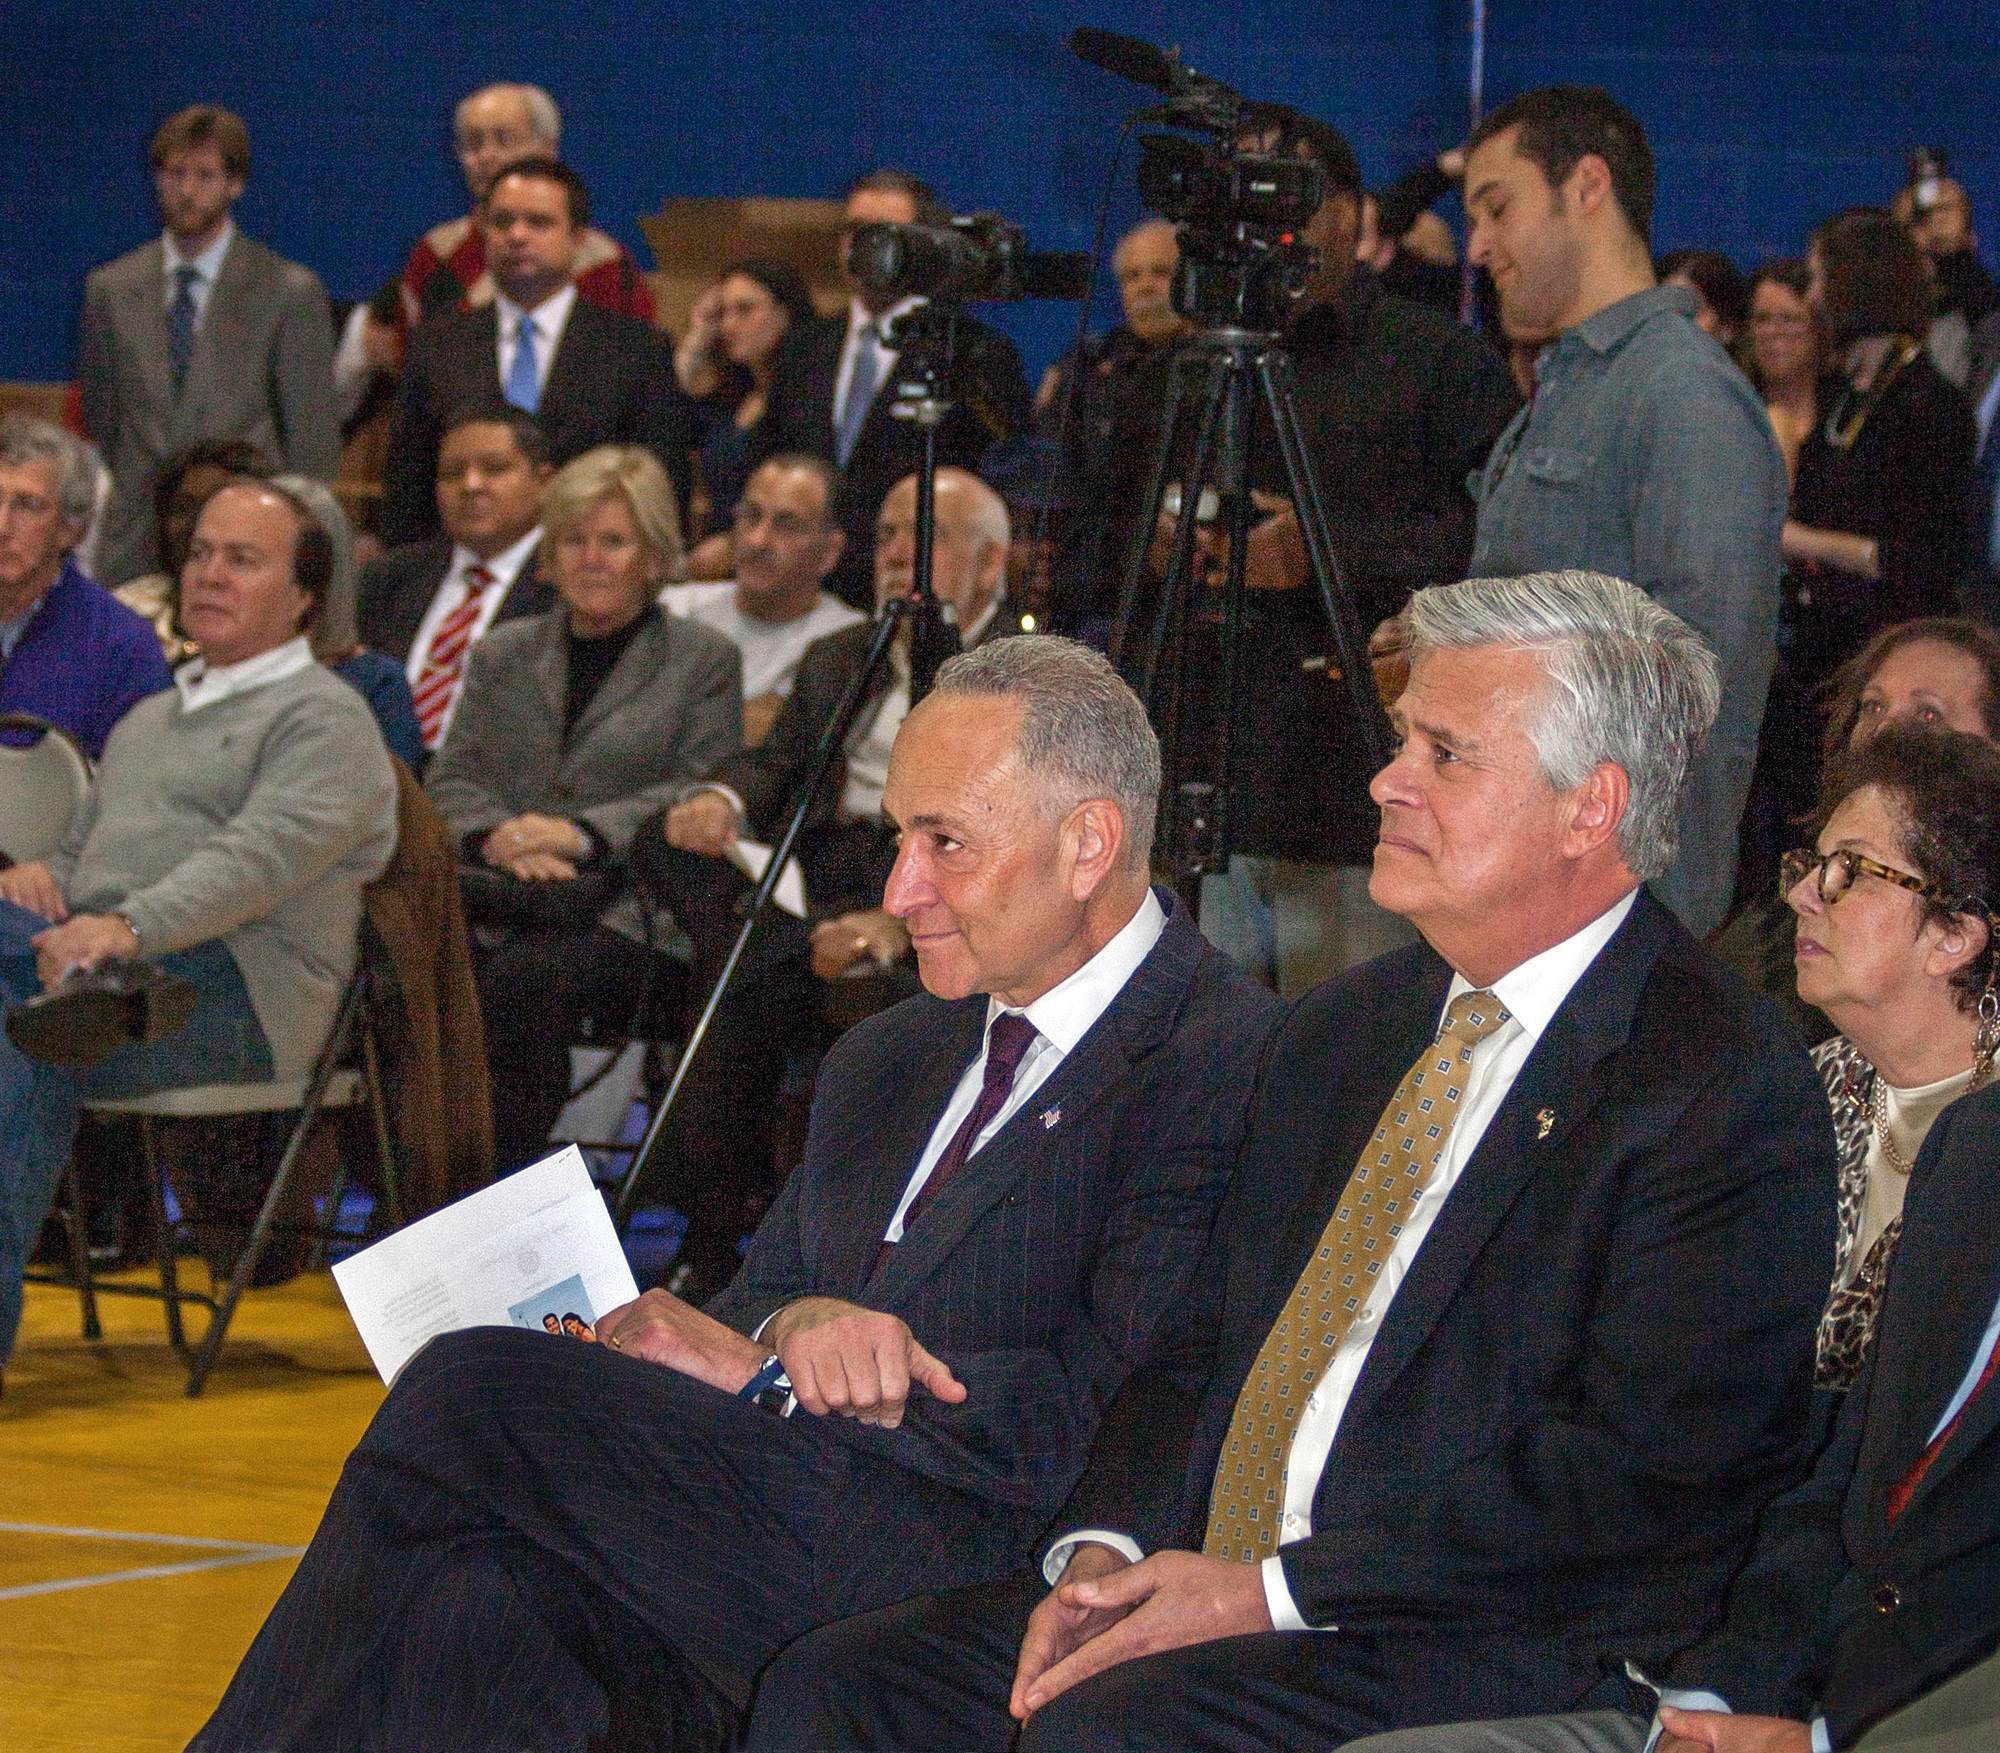 Senator Charles Schumer and NY State Senator Dean Skelos listen to Assemblyman Harvey Weisenberg’s farewell address.